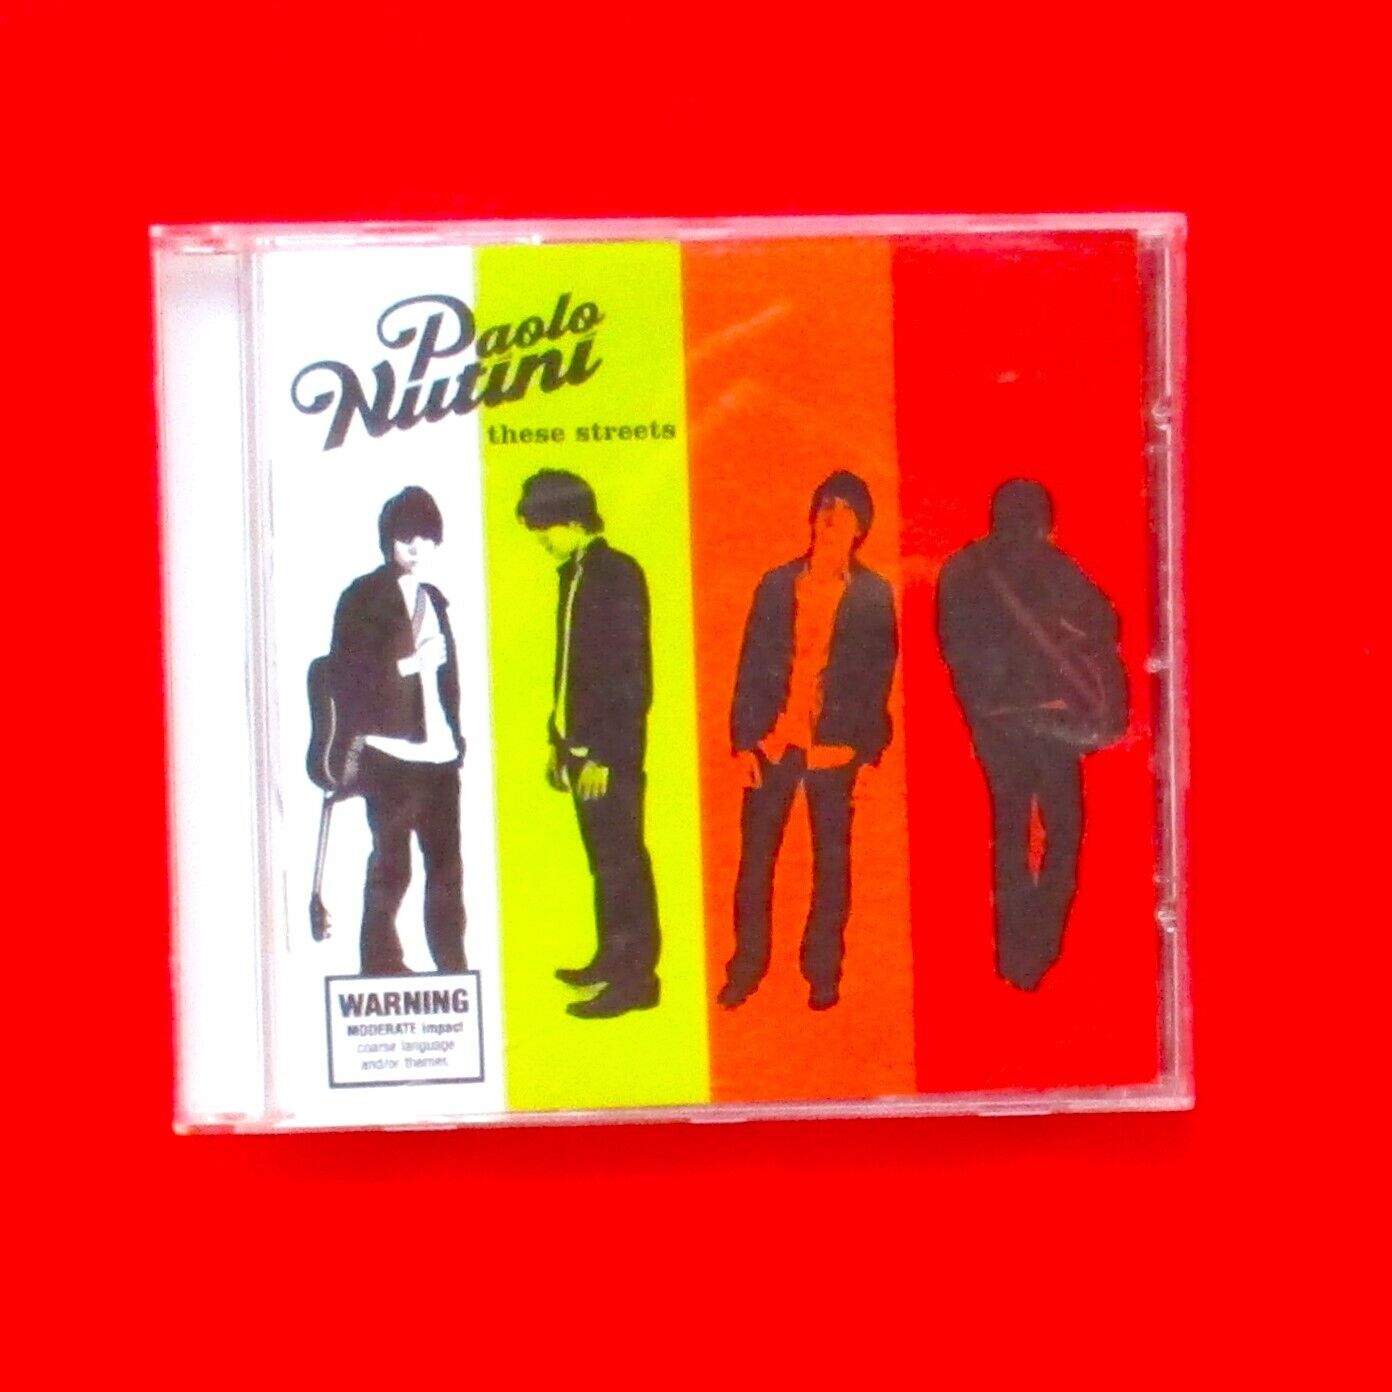 Paolo Nutini ‎These Streets 2007 Australian CD Album Indie Rock